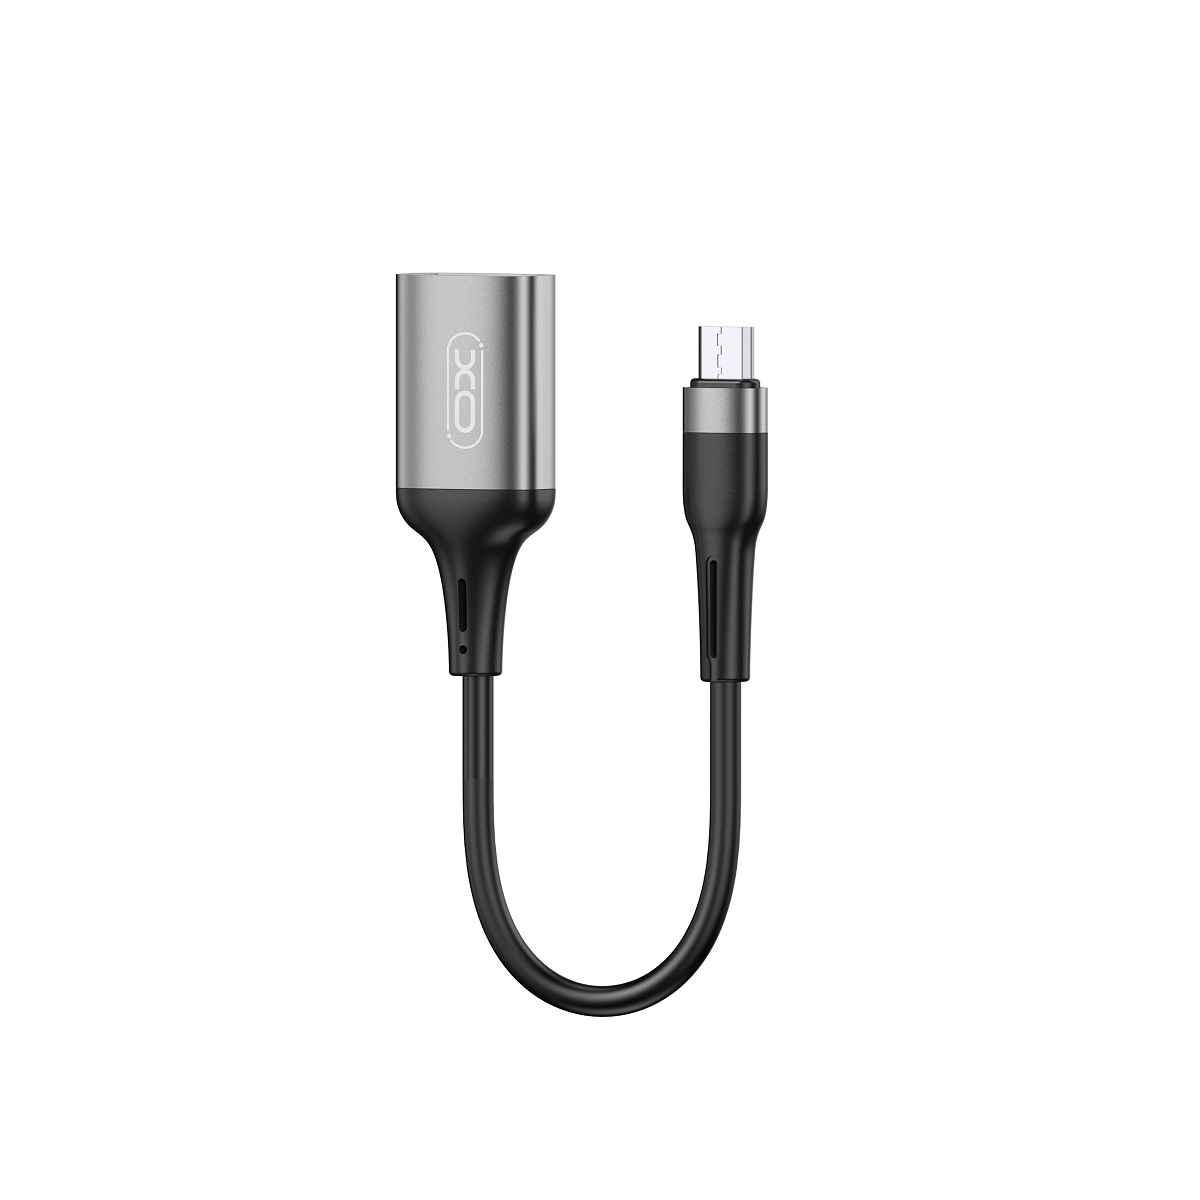 XO XO-Adapter USB Adapter microUSB NB201 - OTG schwarz